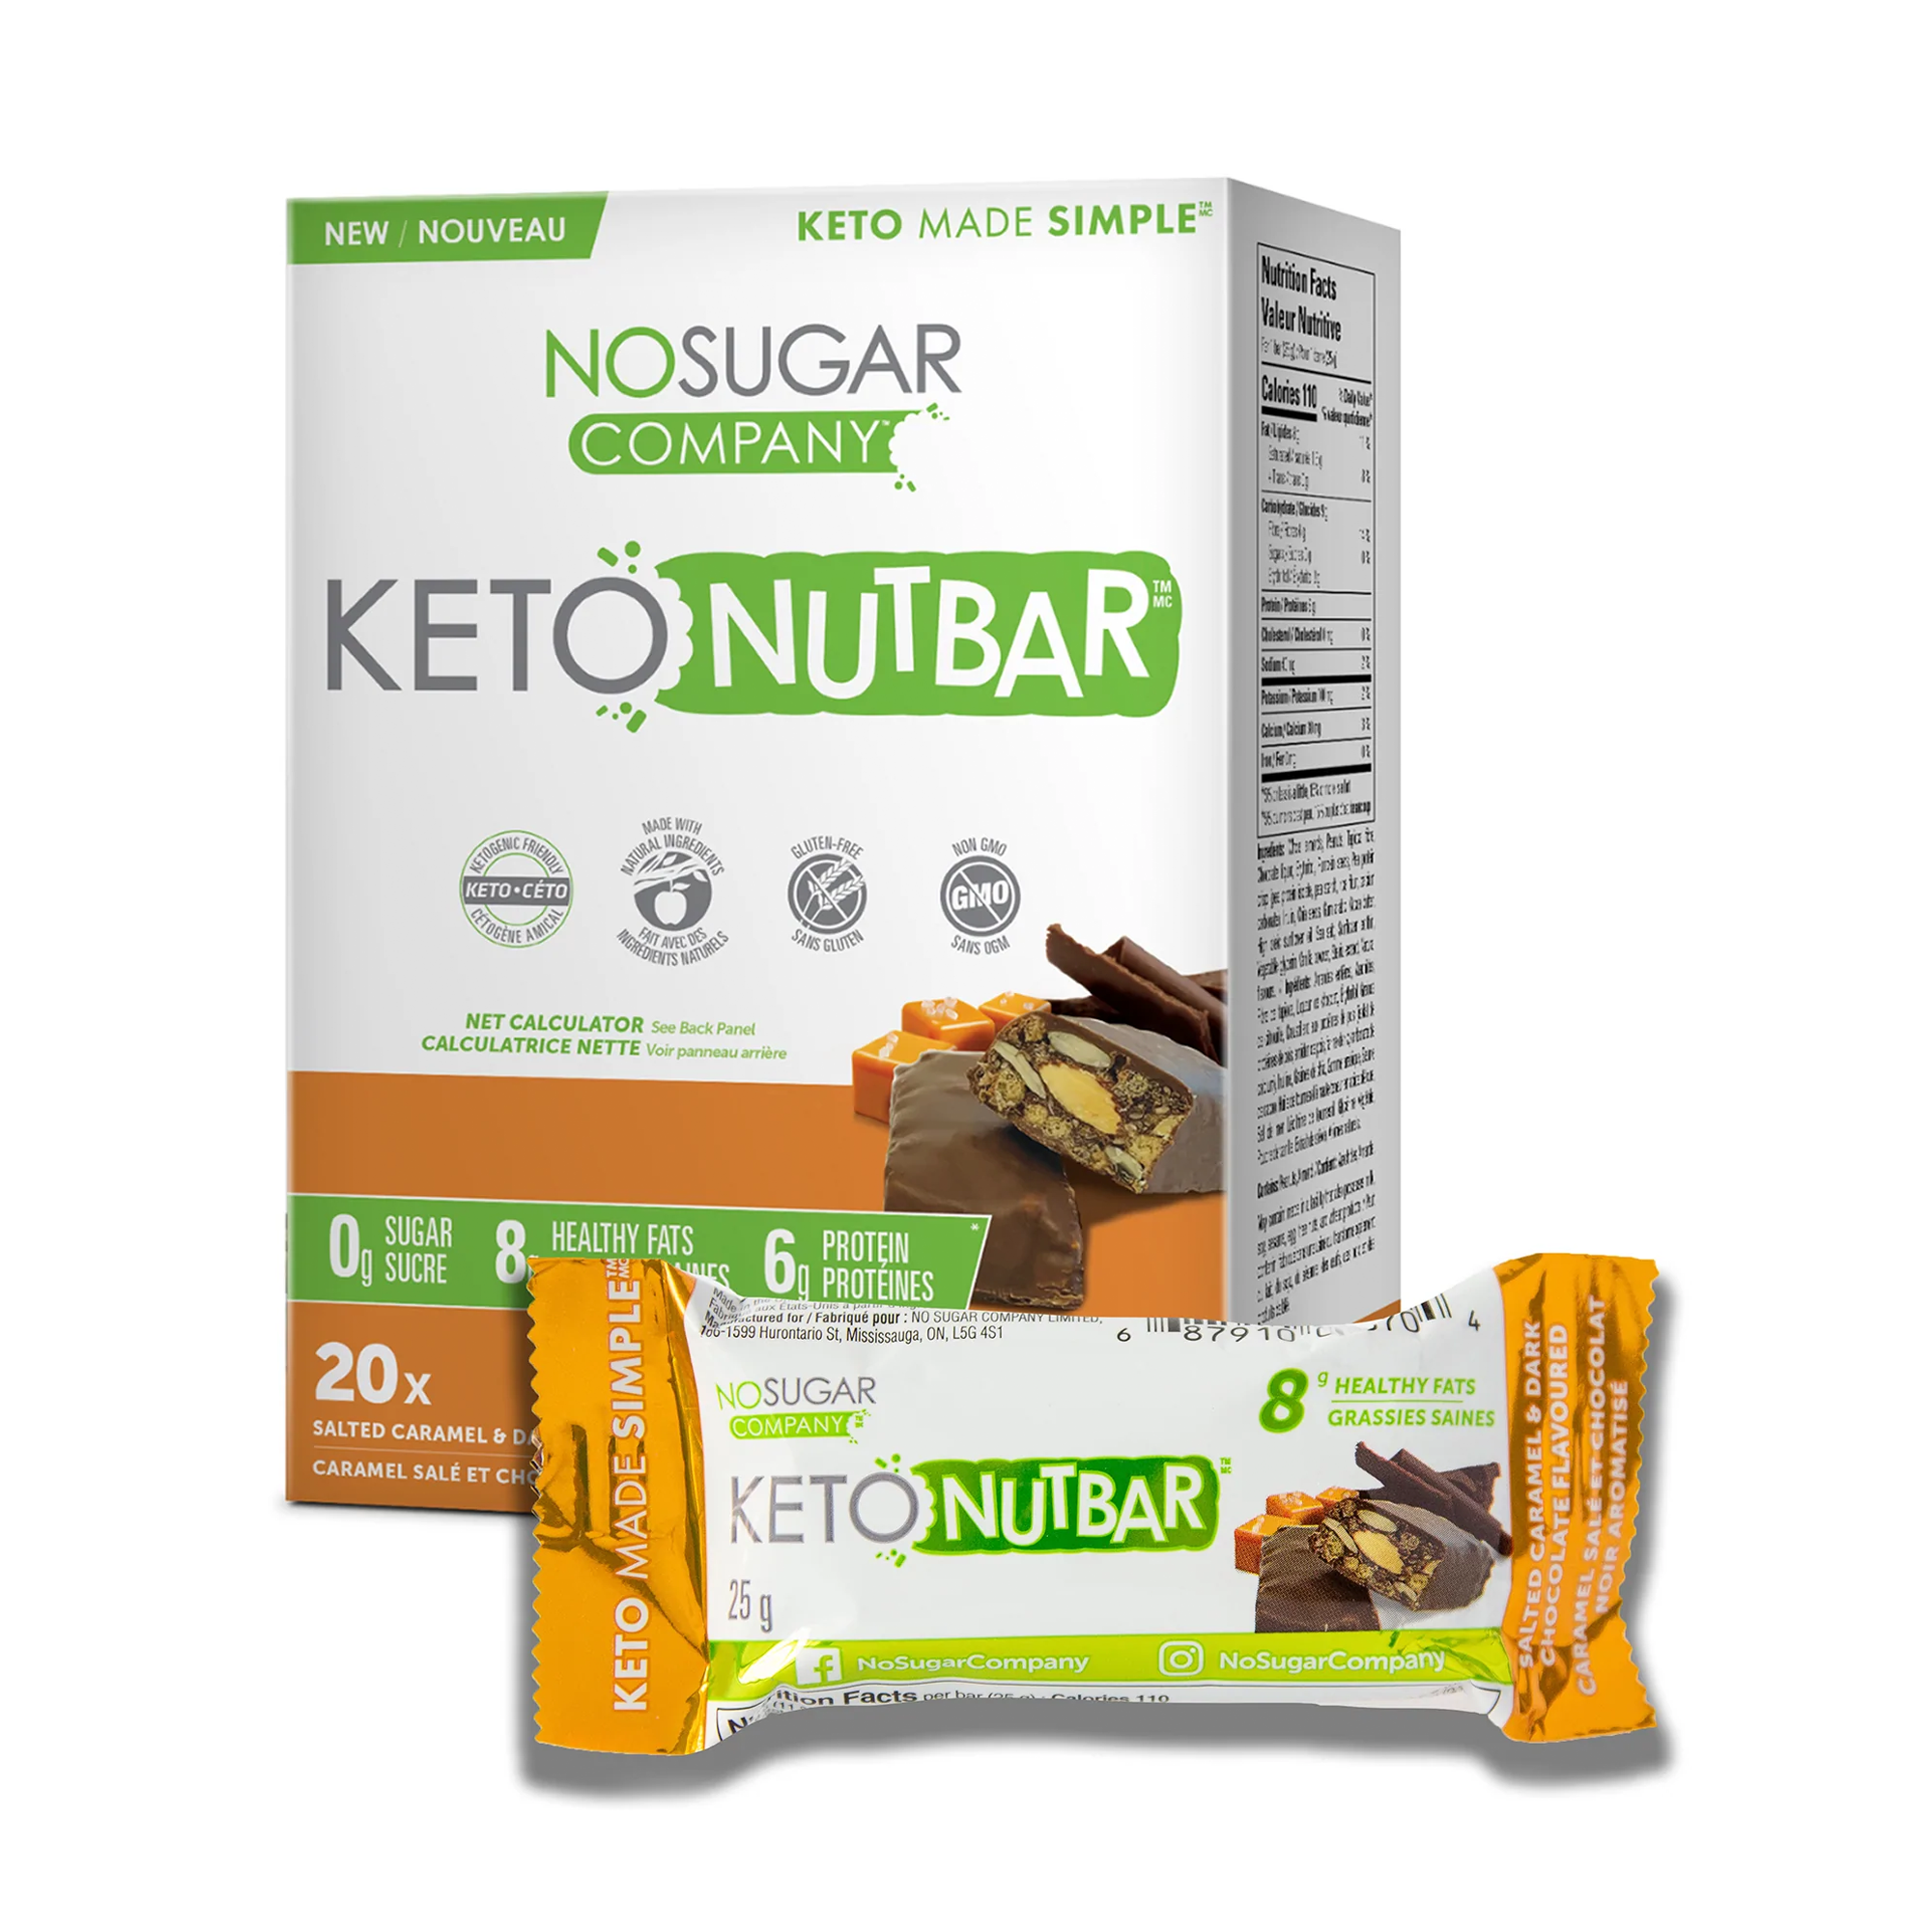 No Sugar Keto Nutbars Salted Caramel and Dark Chocolate - 20 Nutbars, 25g (0.88oz) per Nutbar